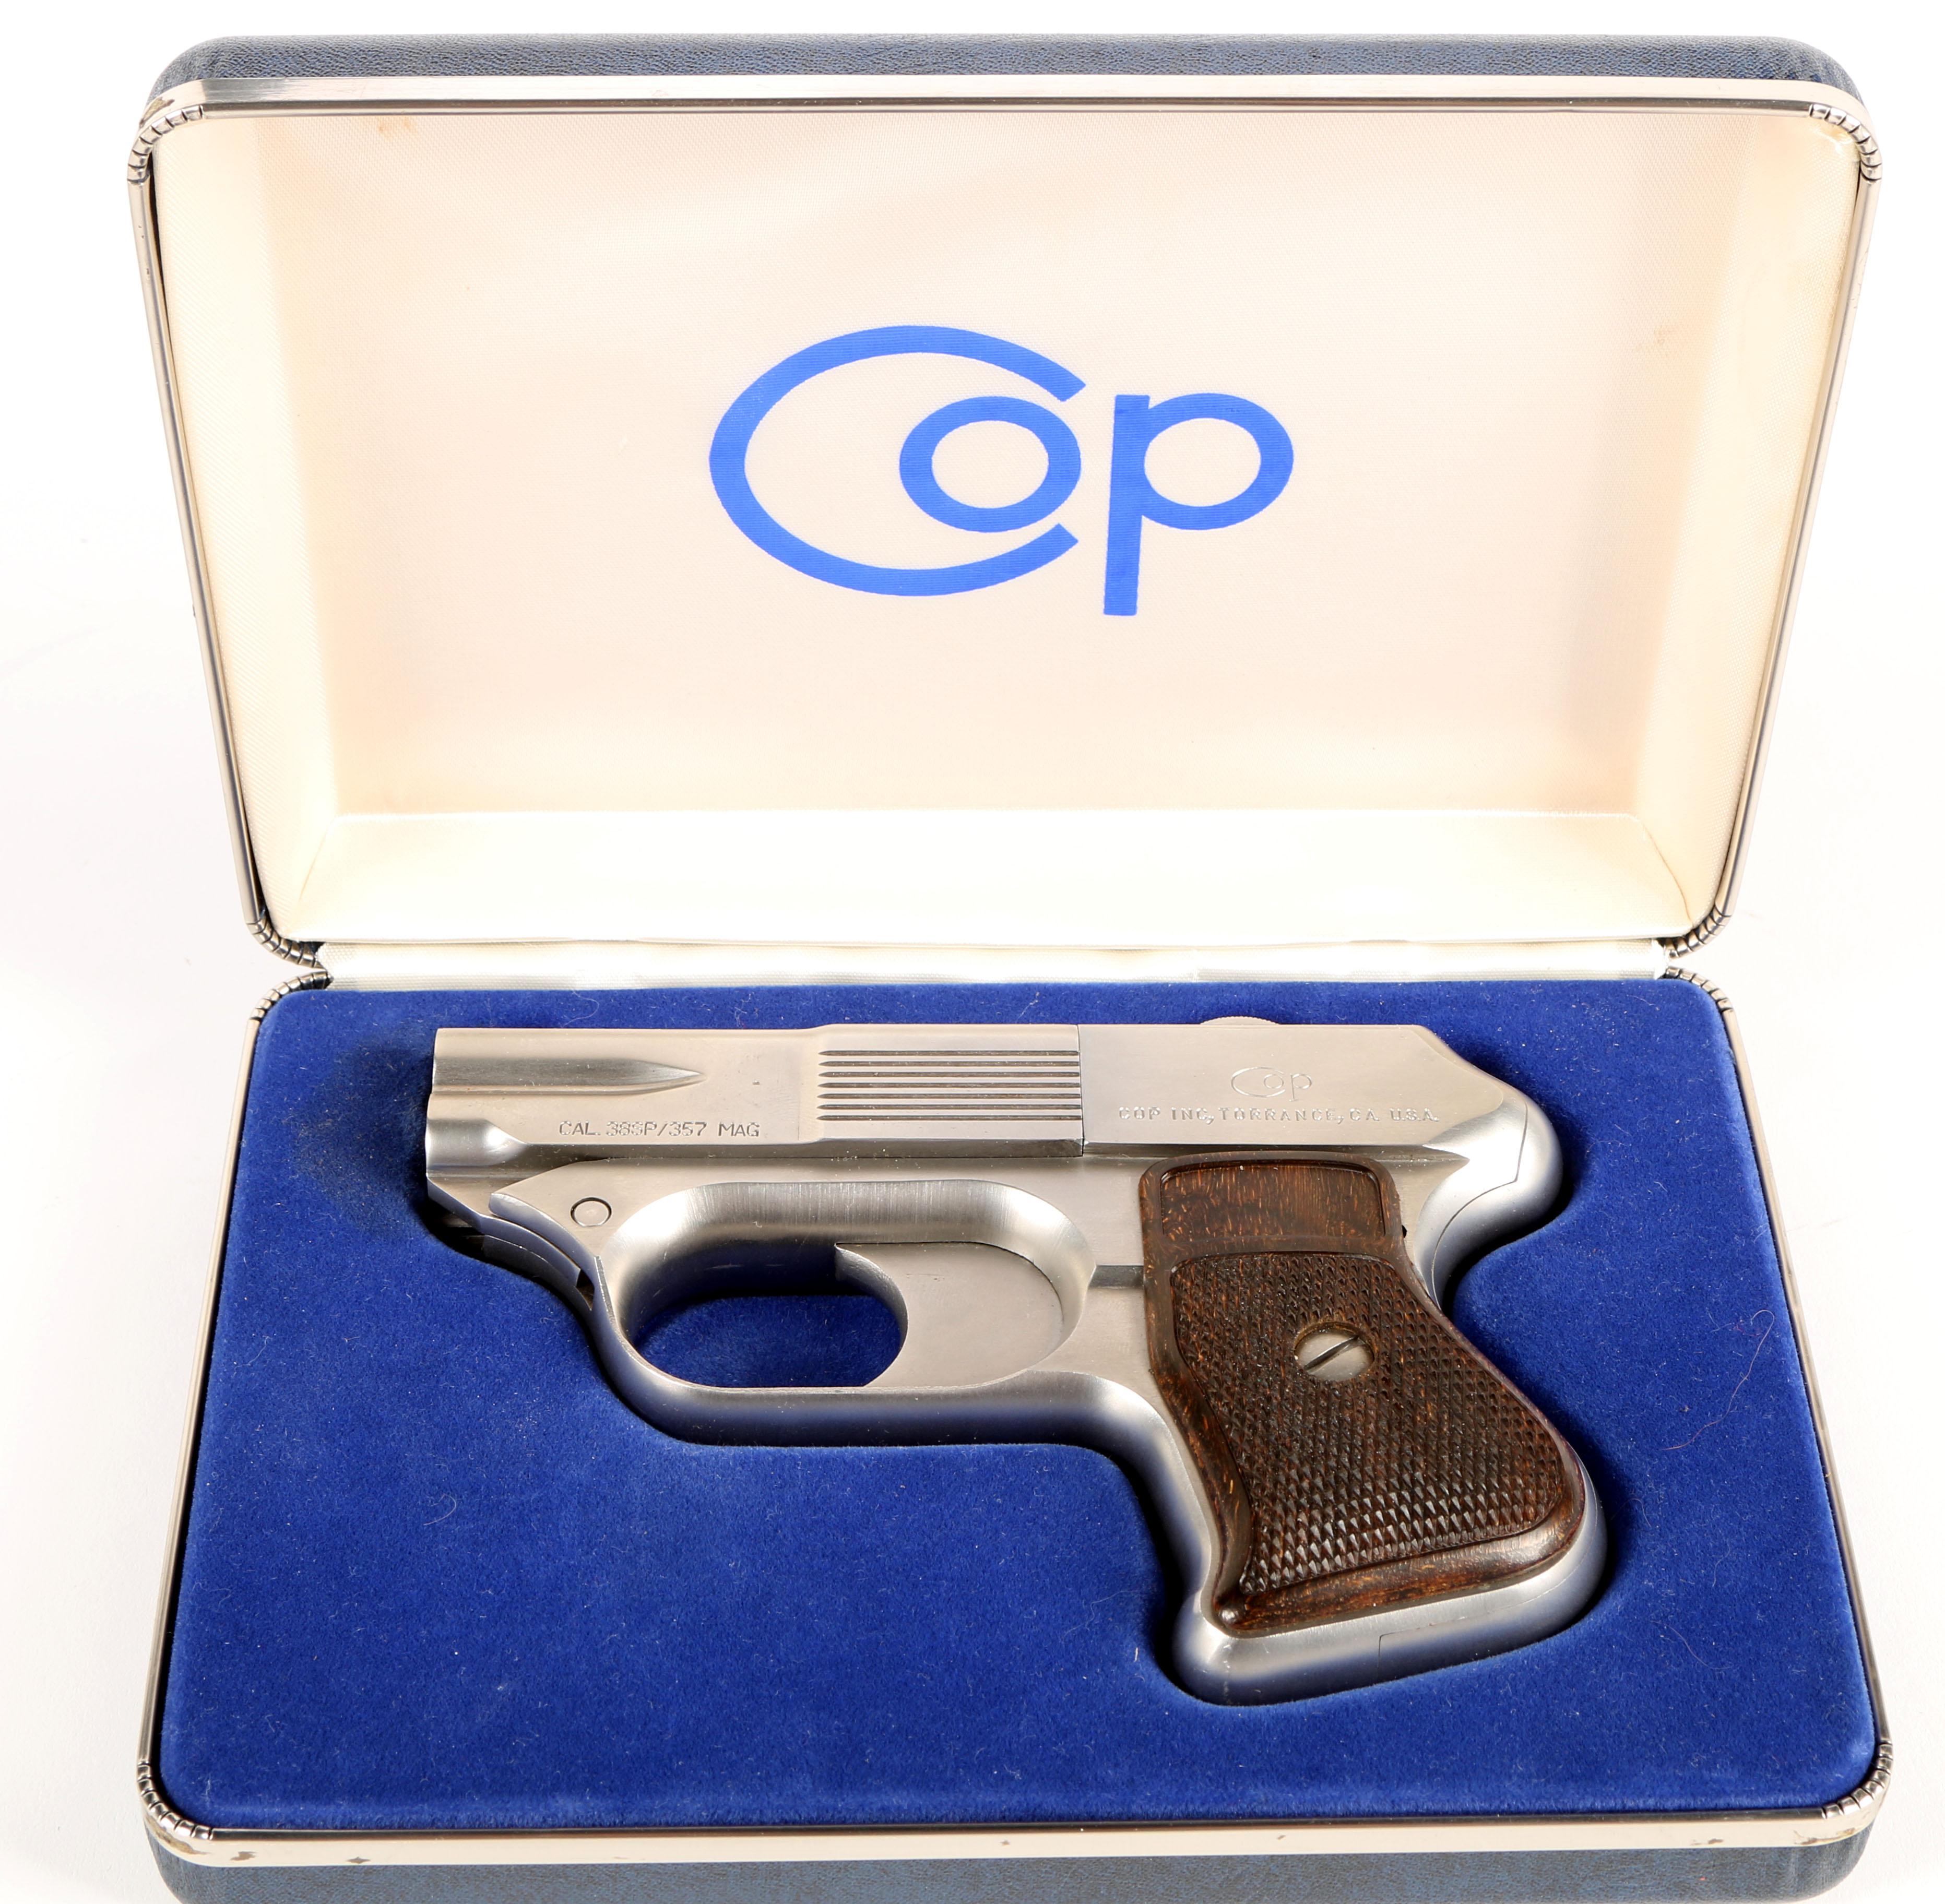 COP Model SS-1 in .357 Magnum